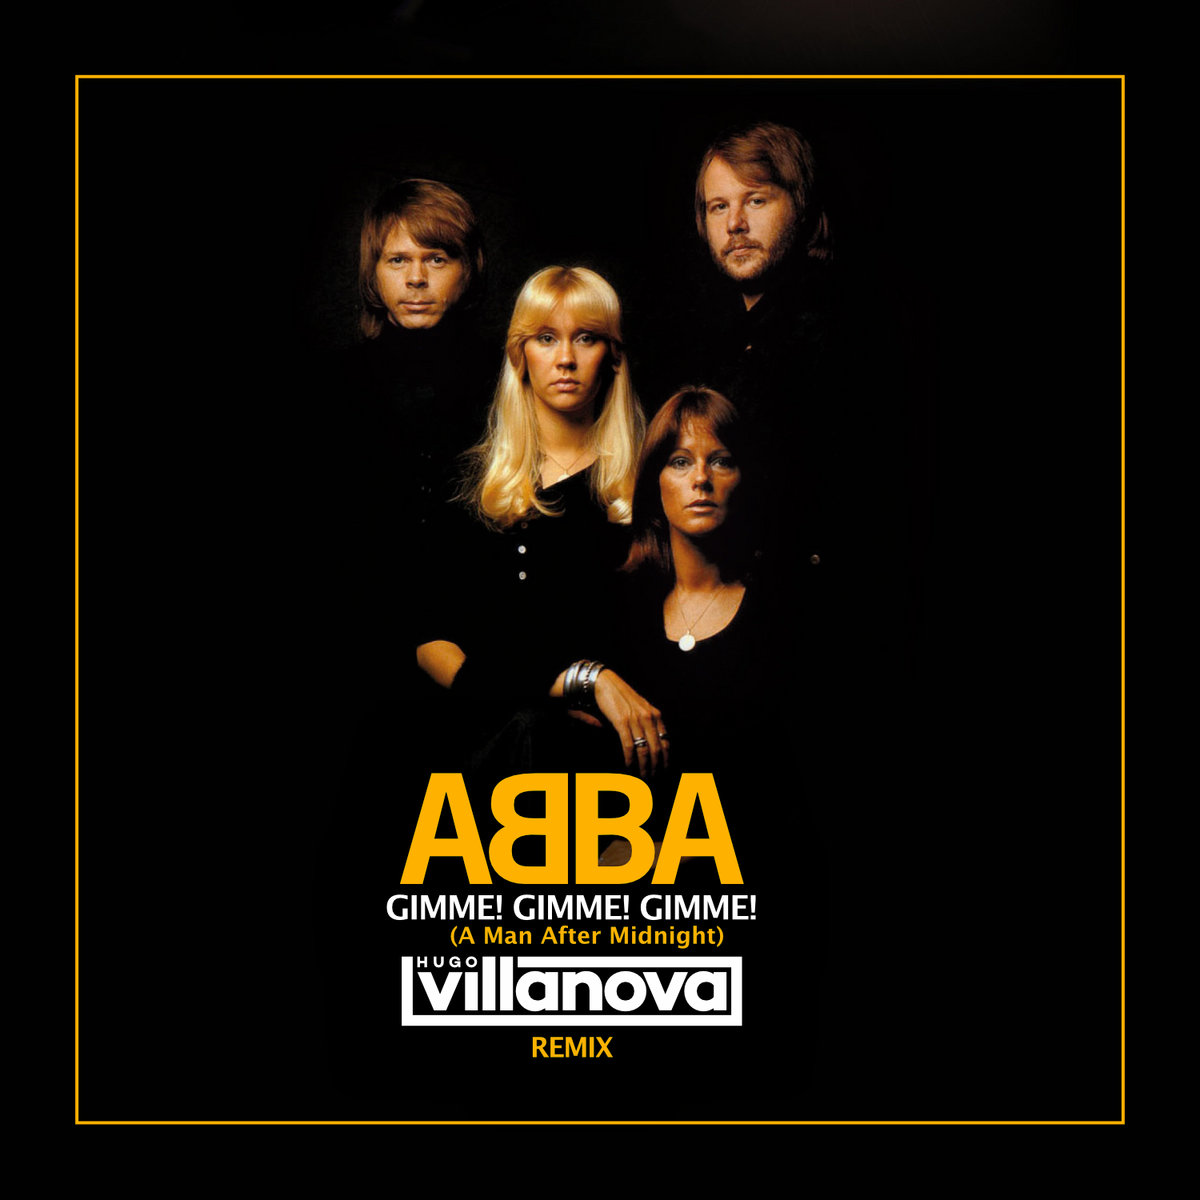 Abba gimme gimme gimme текст. ABBA Gimme. Gimme Gimme Gimme. ABBA Gimme Gimme Gimme обложки альбомов. Gimme Gimme Gimme a man after Midnight.